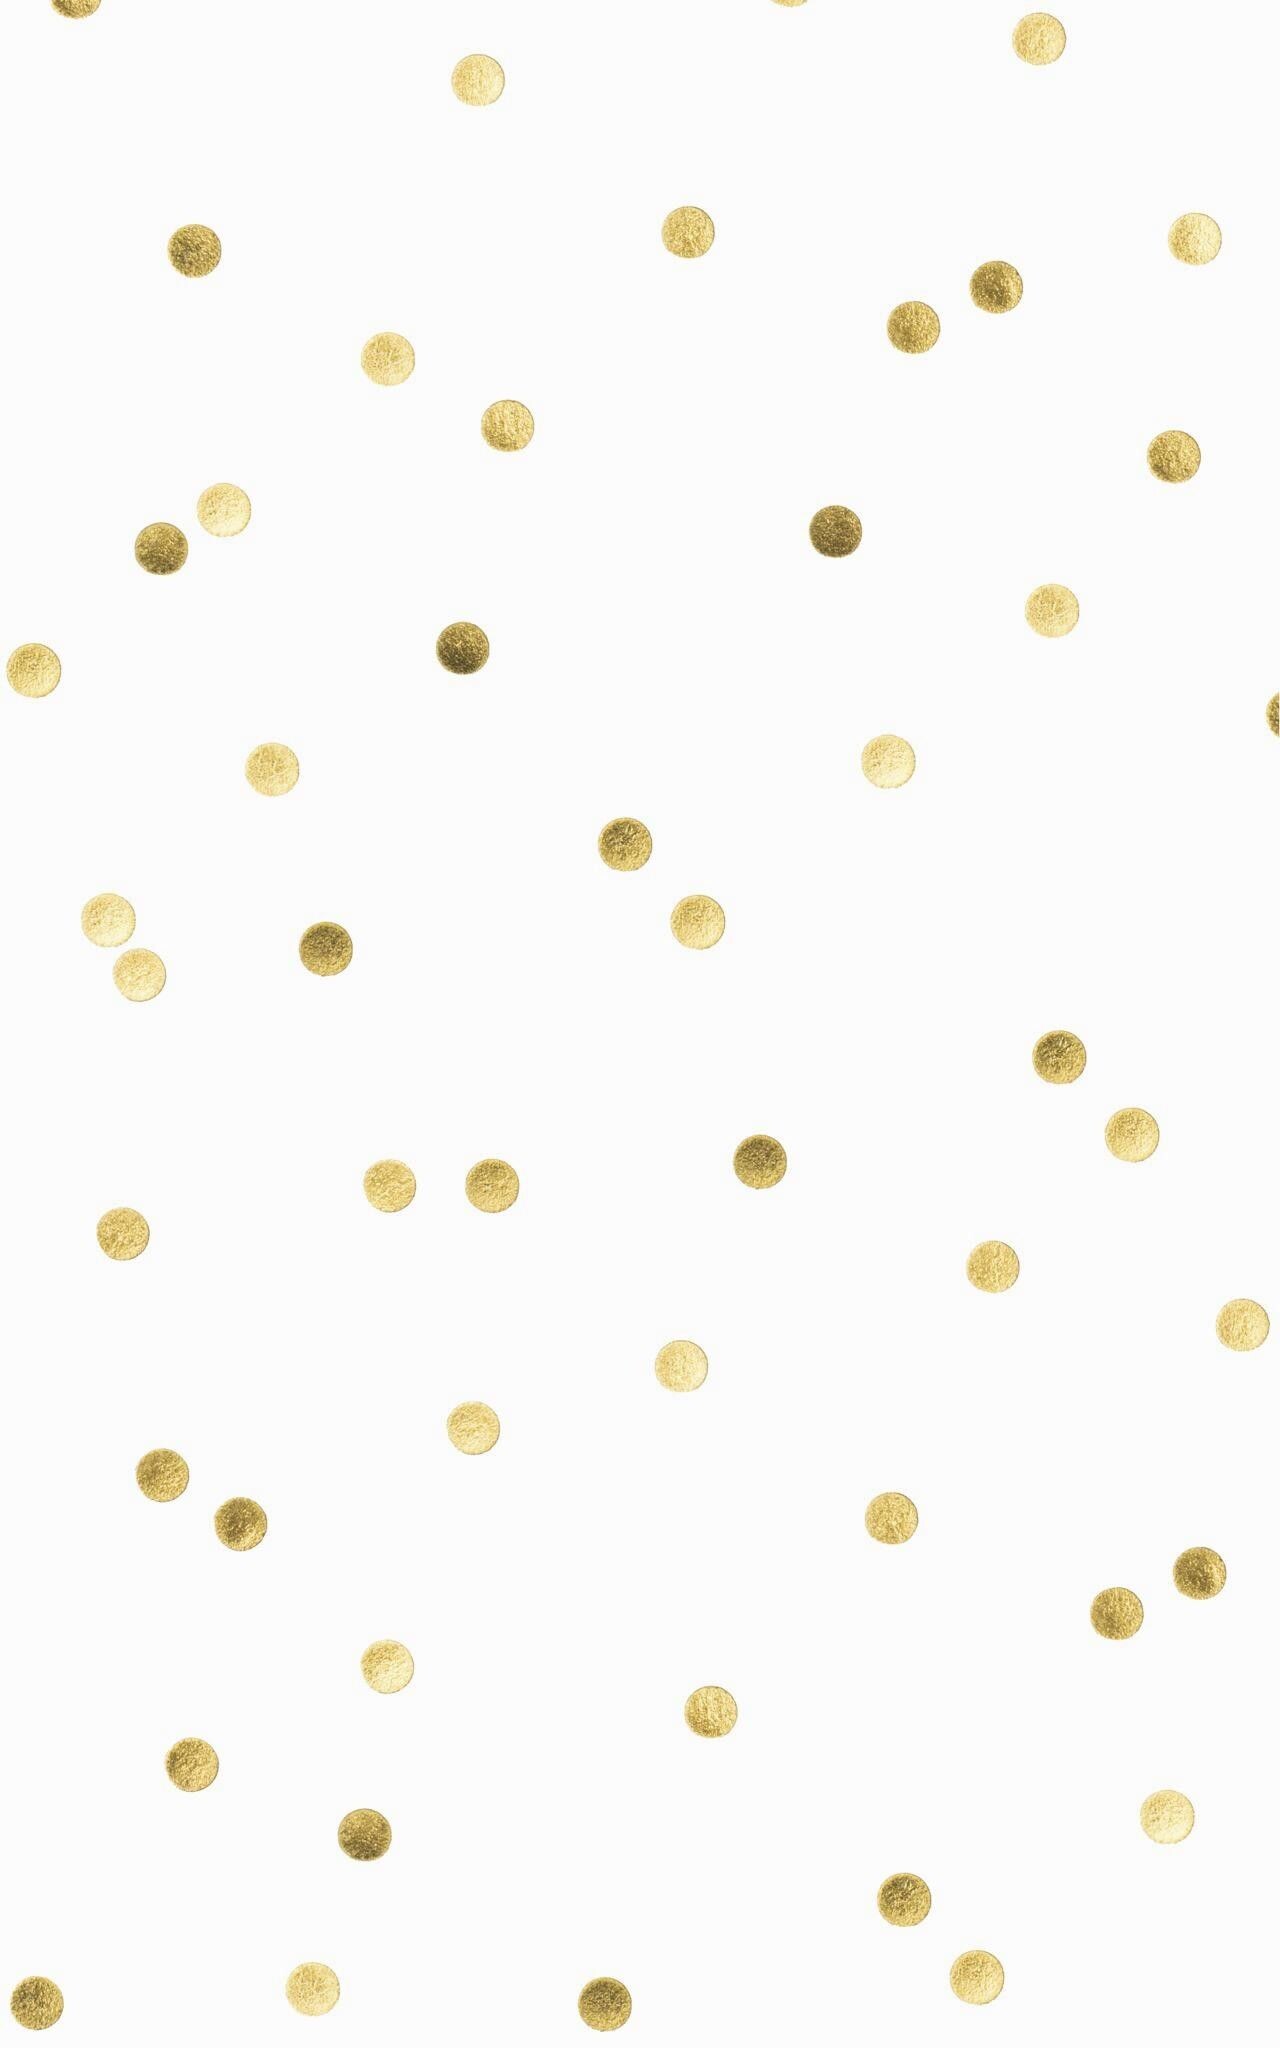 Gold Polka Dot: Gold spots, Glitter foil confetti, A spatter of decorative and cheerful dots. 1280x2050 HD Wallpaper.